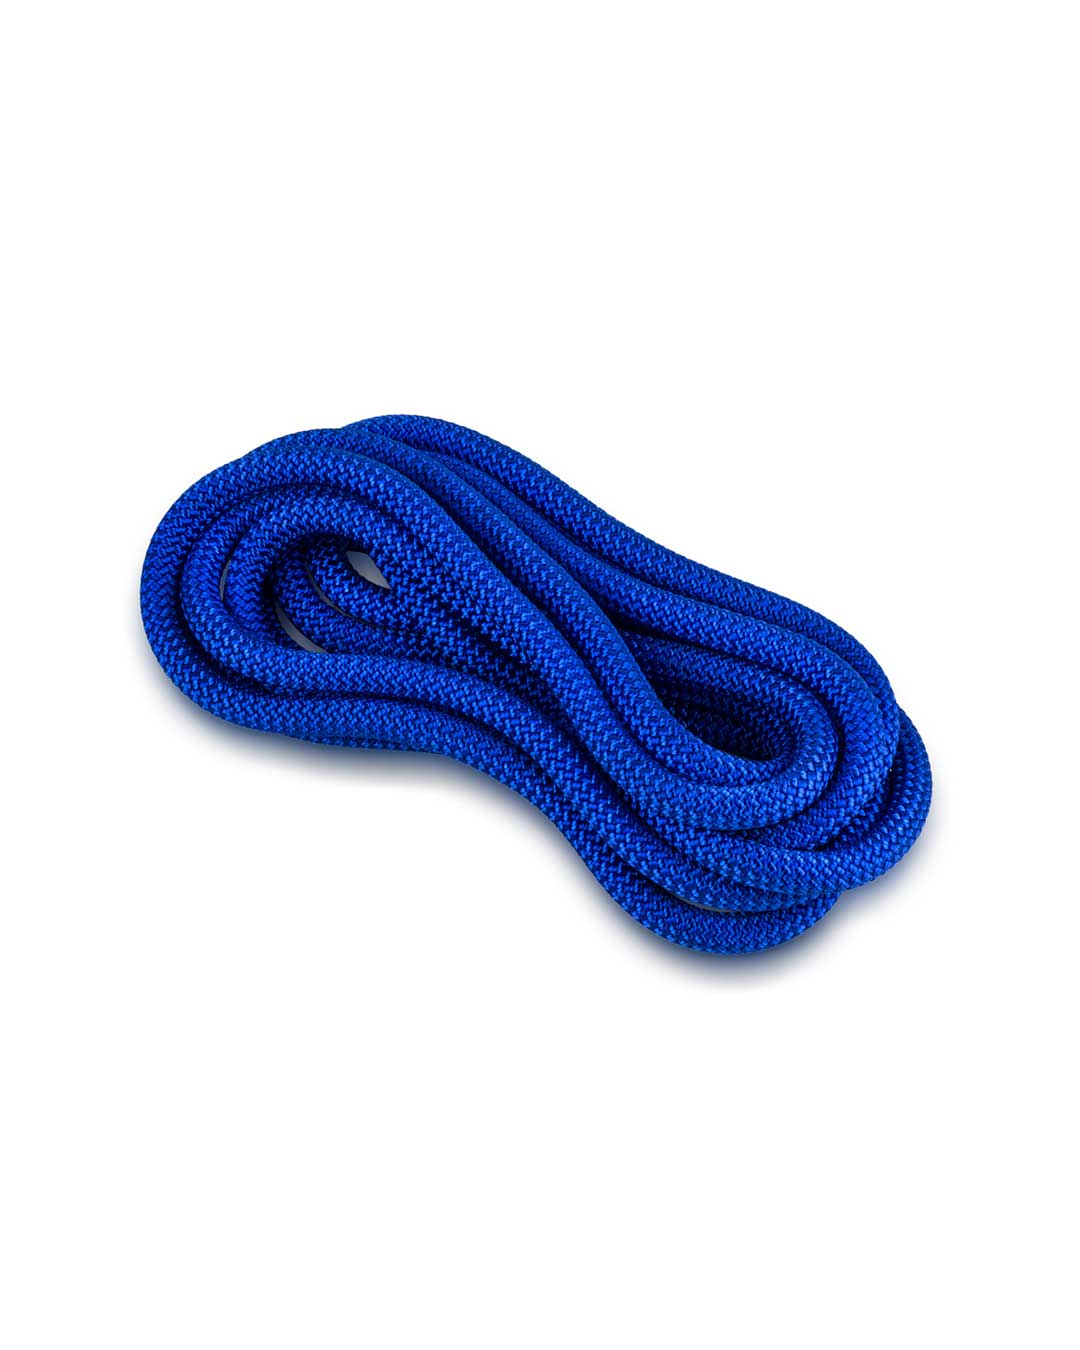 Cuerda gimnasia rítmica azul - 3 m